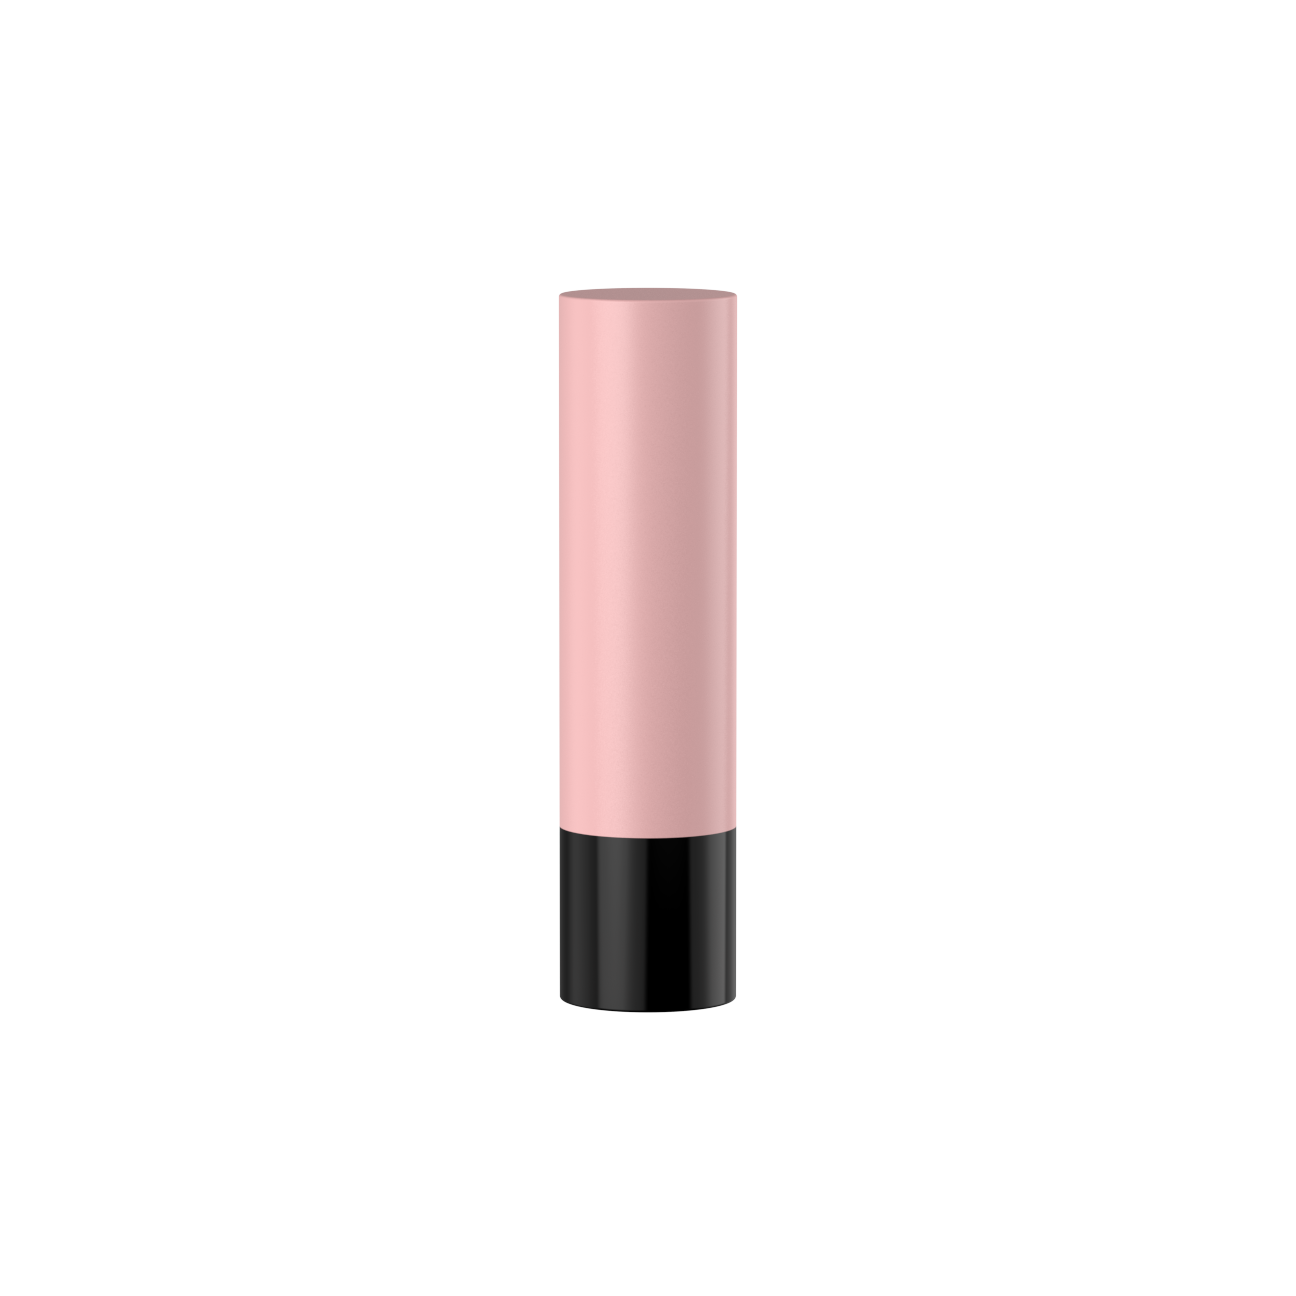 Lip Balm Tw010 Makeup Packaging Ctkclip 1812